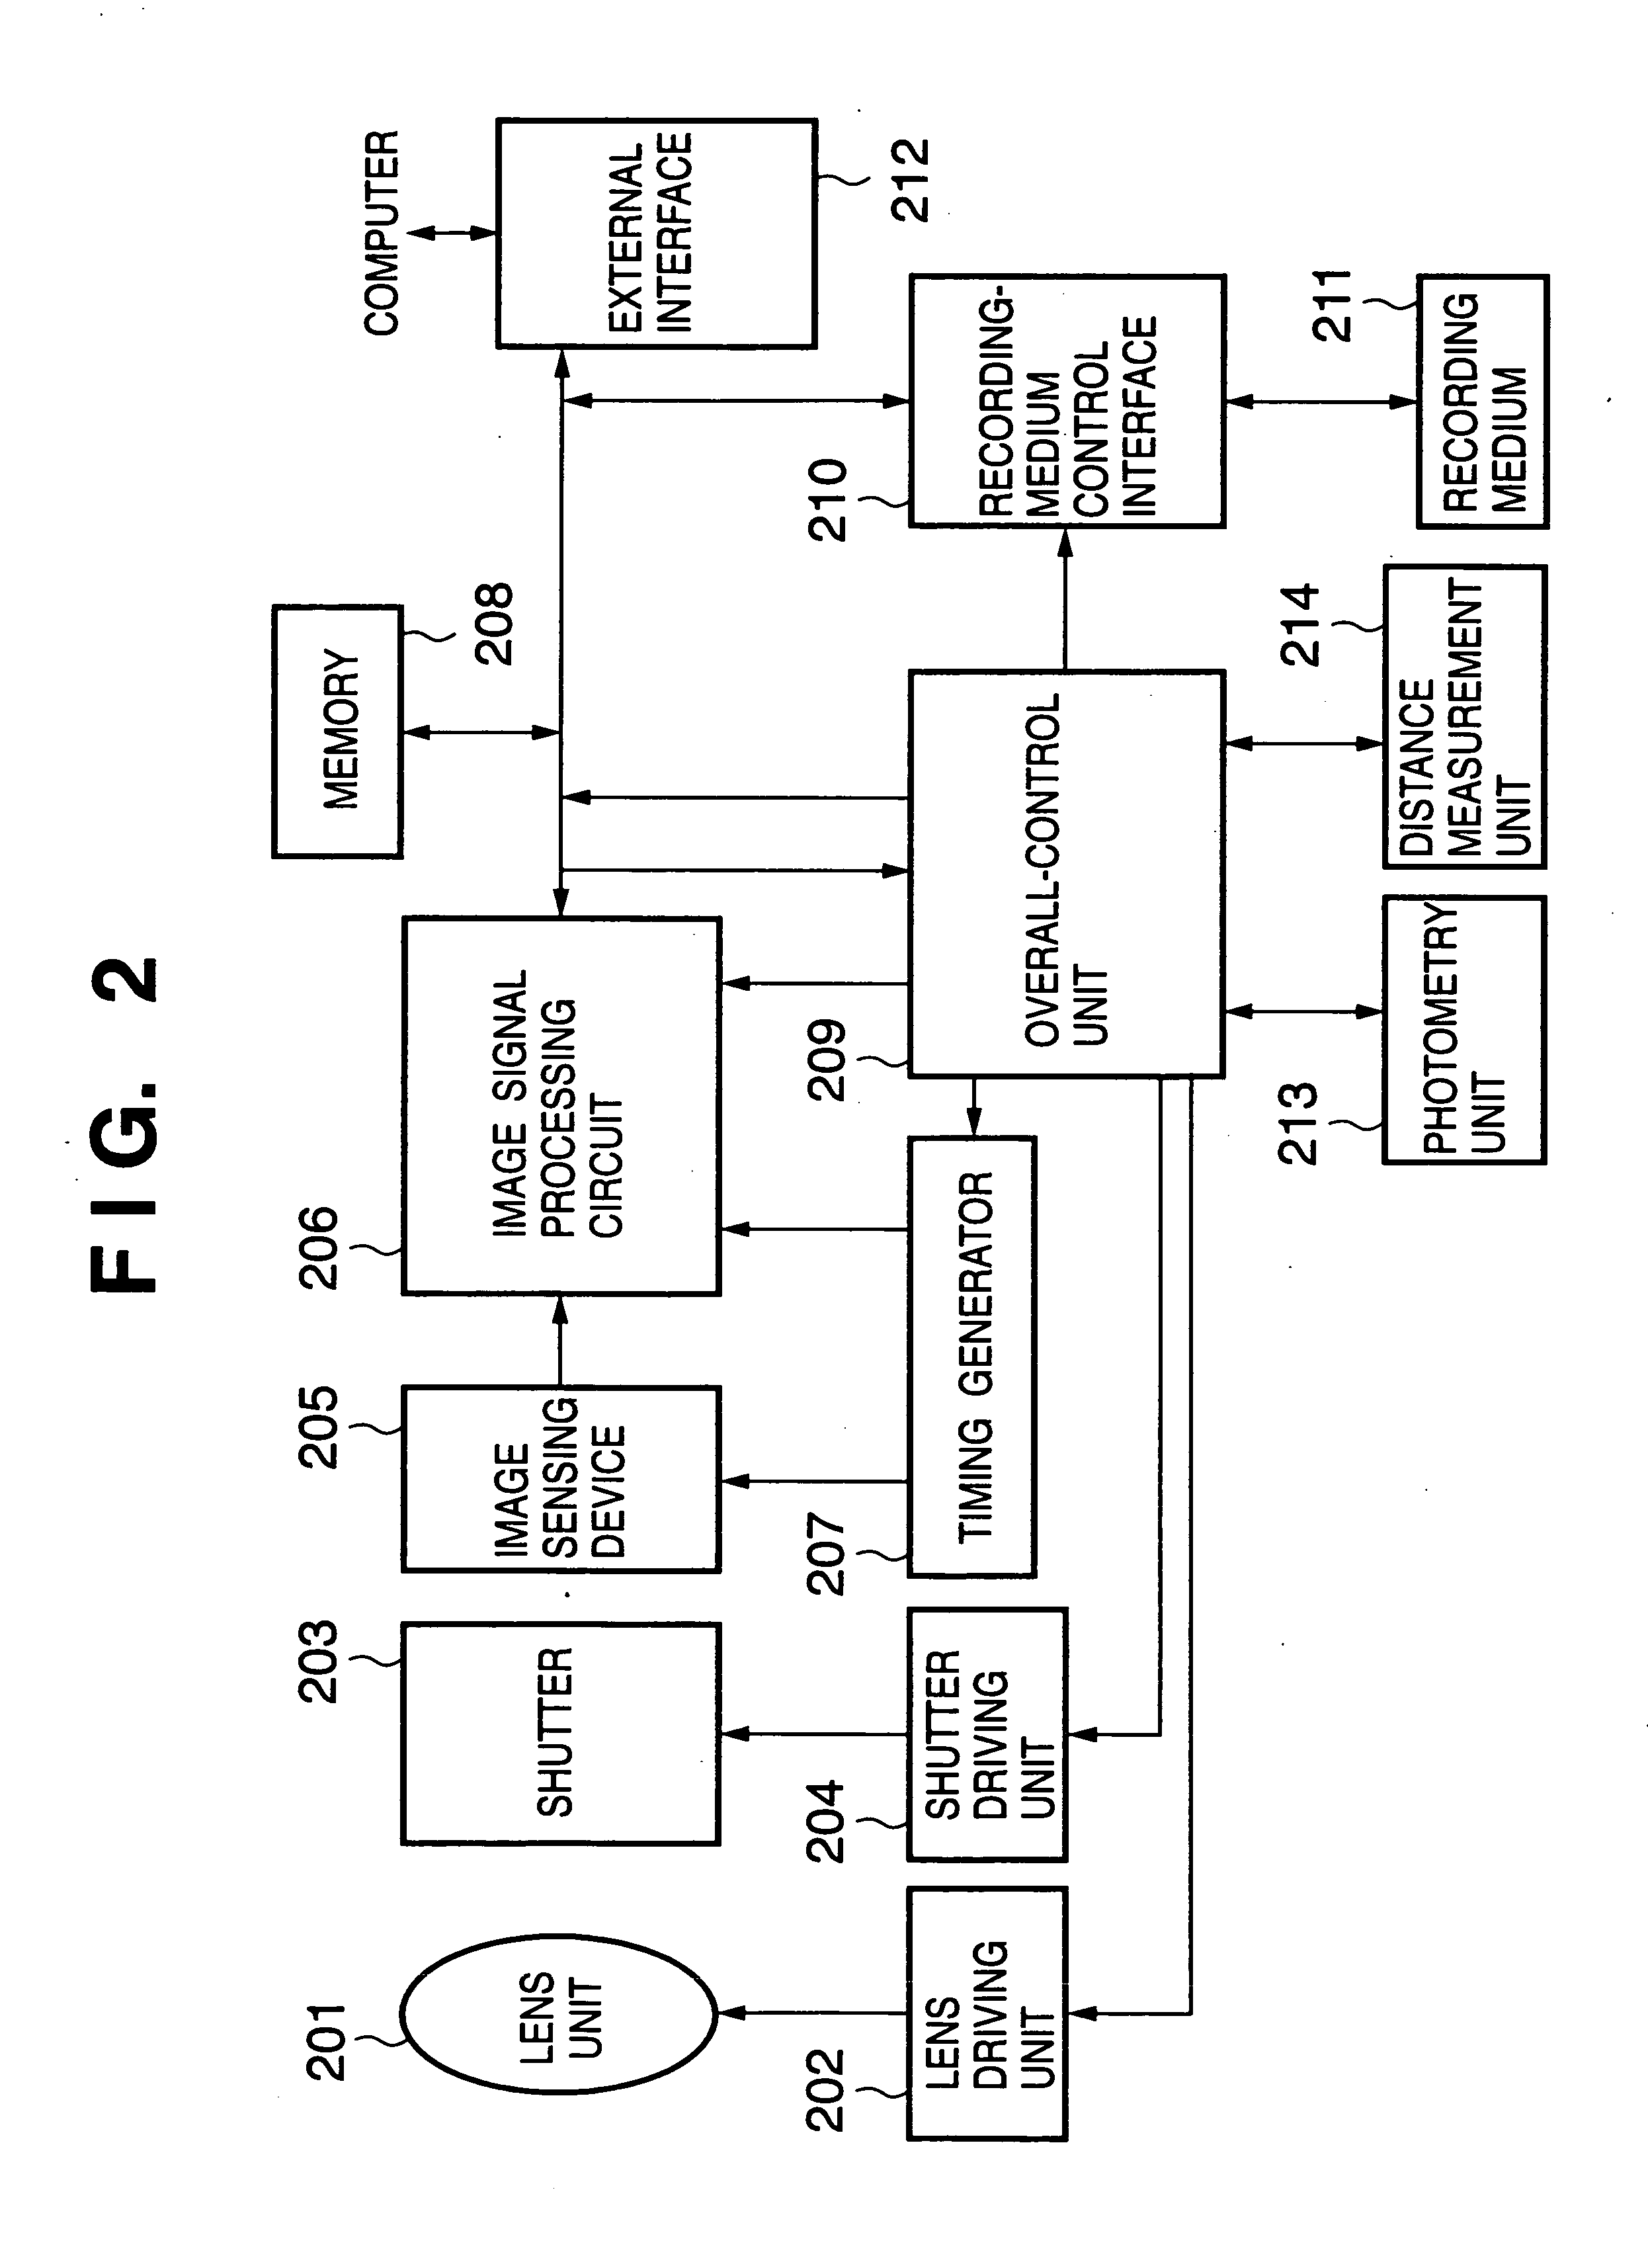 Image sensing apparatus and method of controlling same